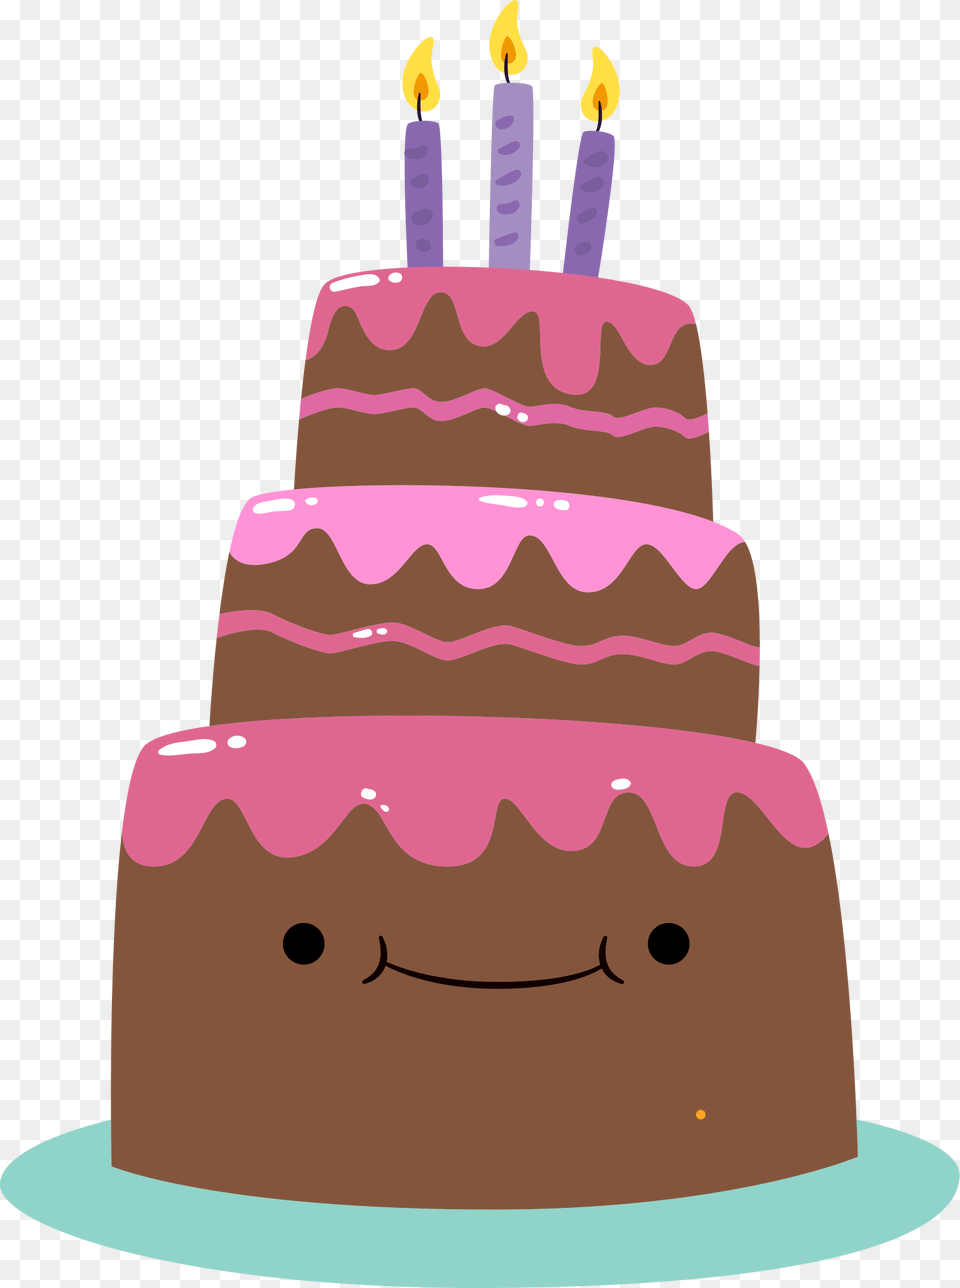 Downloadable Birthday Gift Certificate Template, Birthday Cake, Cake, Cream, Dessert Png Image